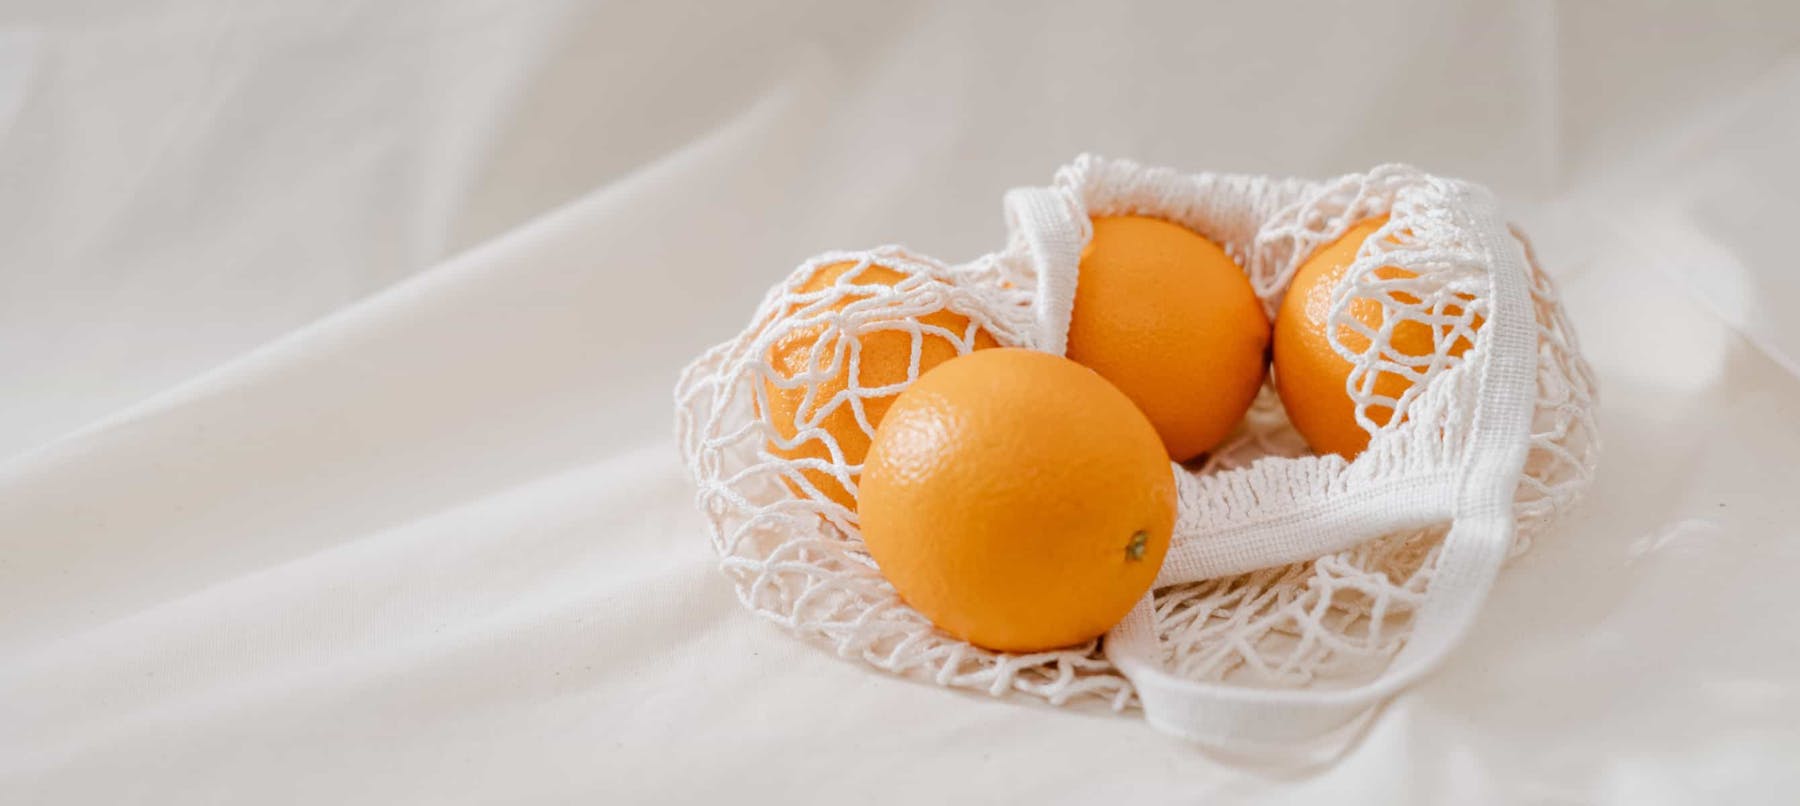 Four orange fruits in a Basket on white linen